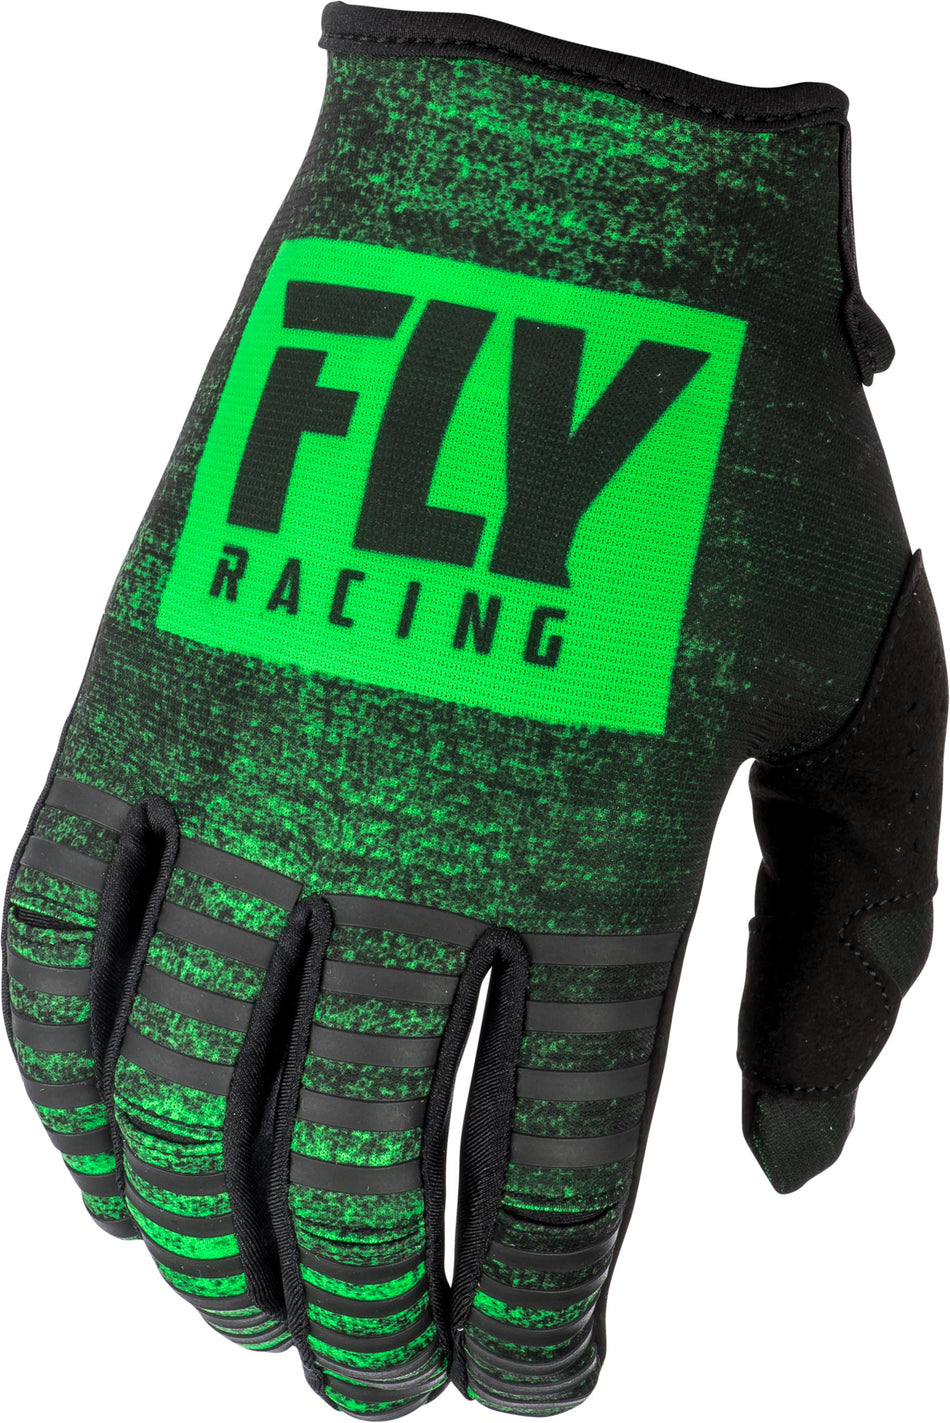 FLY RACING Kinetic Noiz Gloves Neon Green/Black Sz 10 372-51510